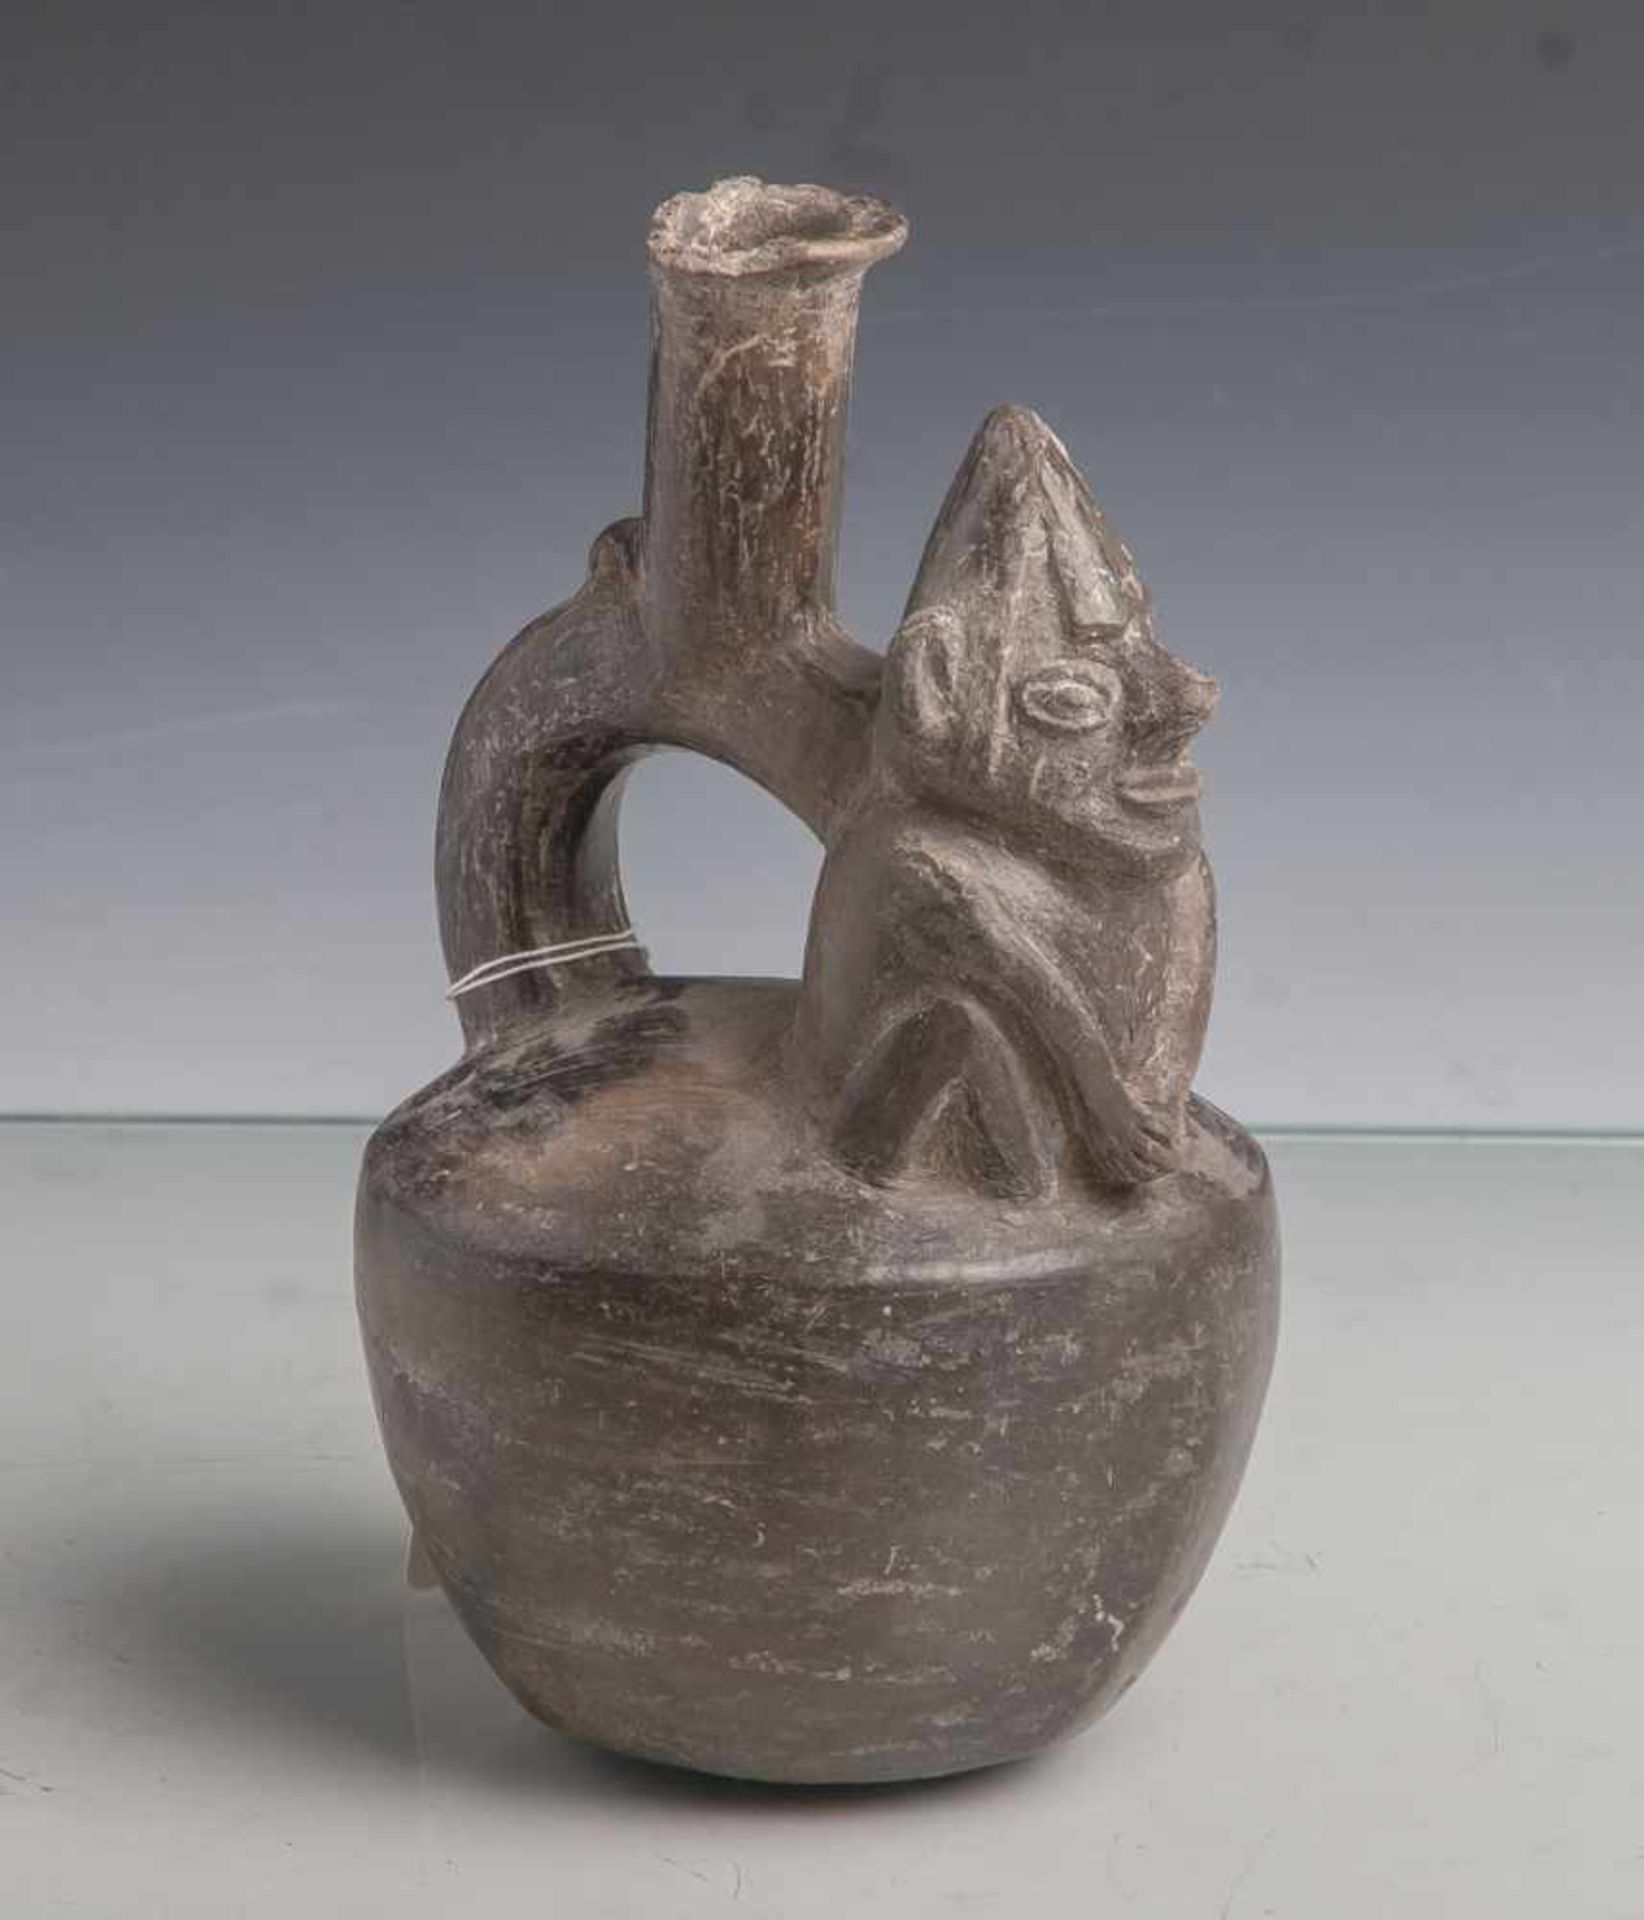 Steigbügelgefäß (Moche-Kultur), kugelförmiger Gefäßkörper, oben aufgesetzt eineaffenartige Figur,